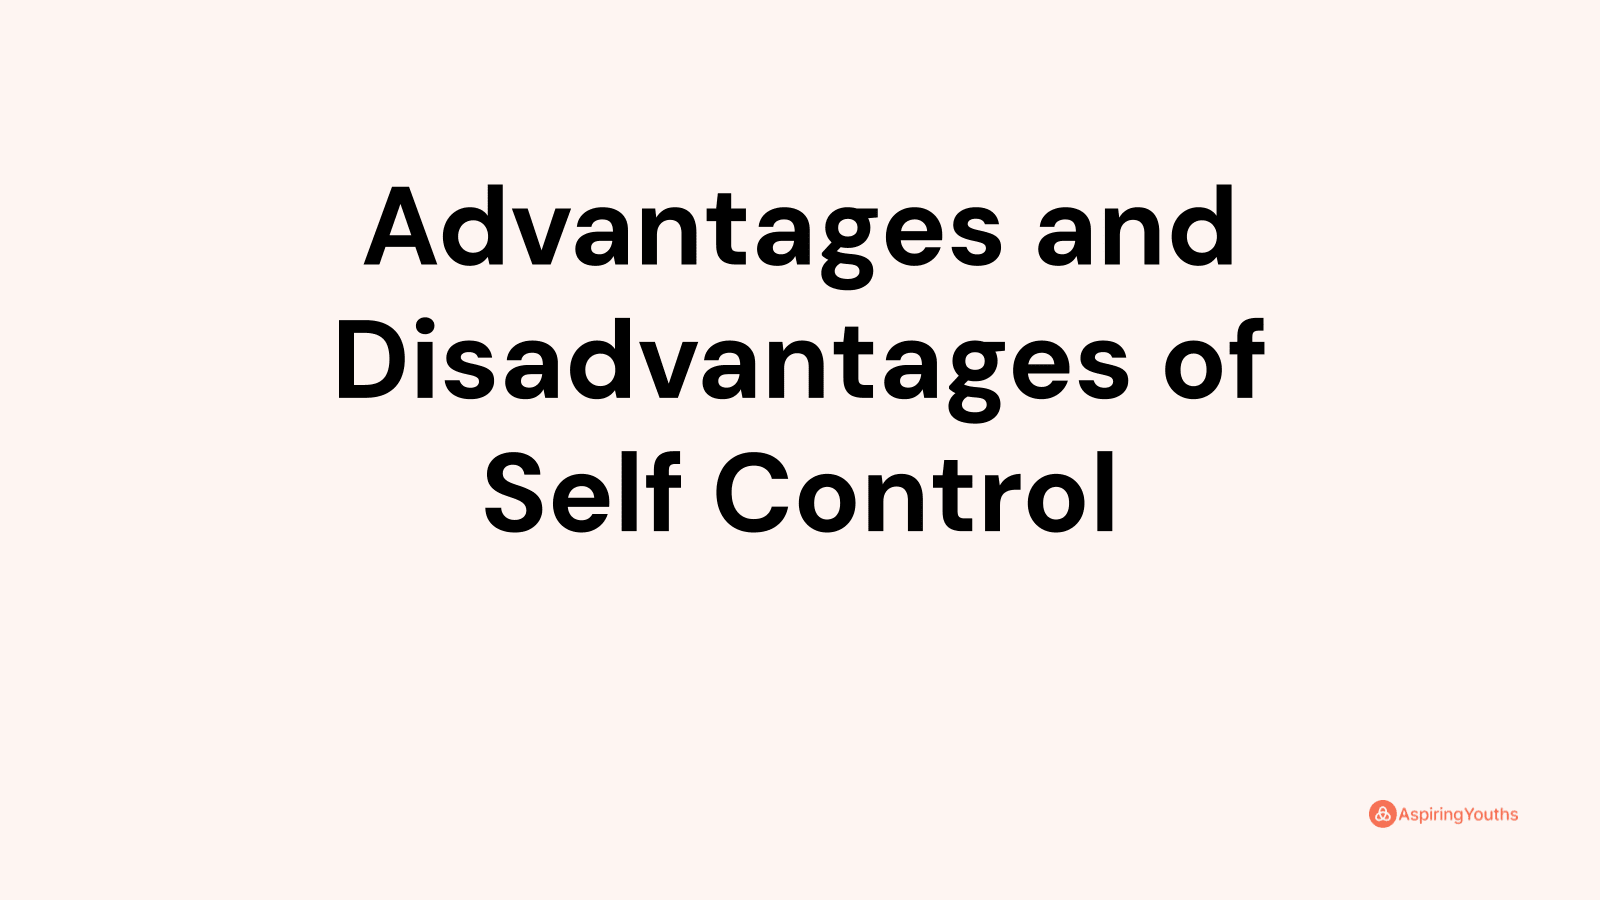 Advantages and disadvantages of Self Control